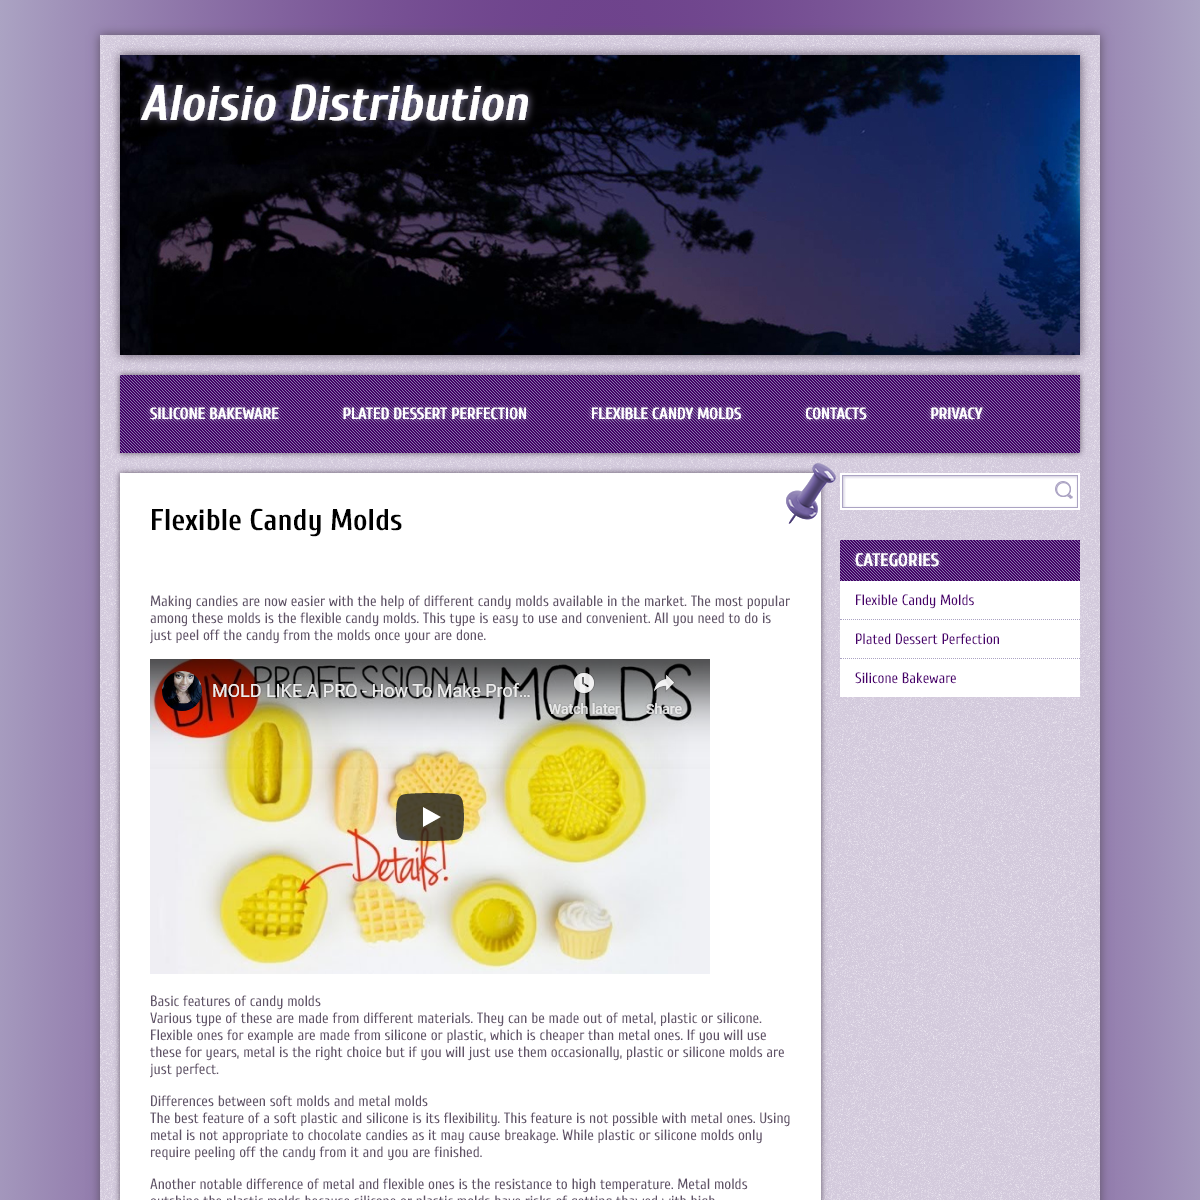 A complete backup of aloisio-distribution.com